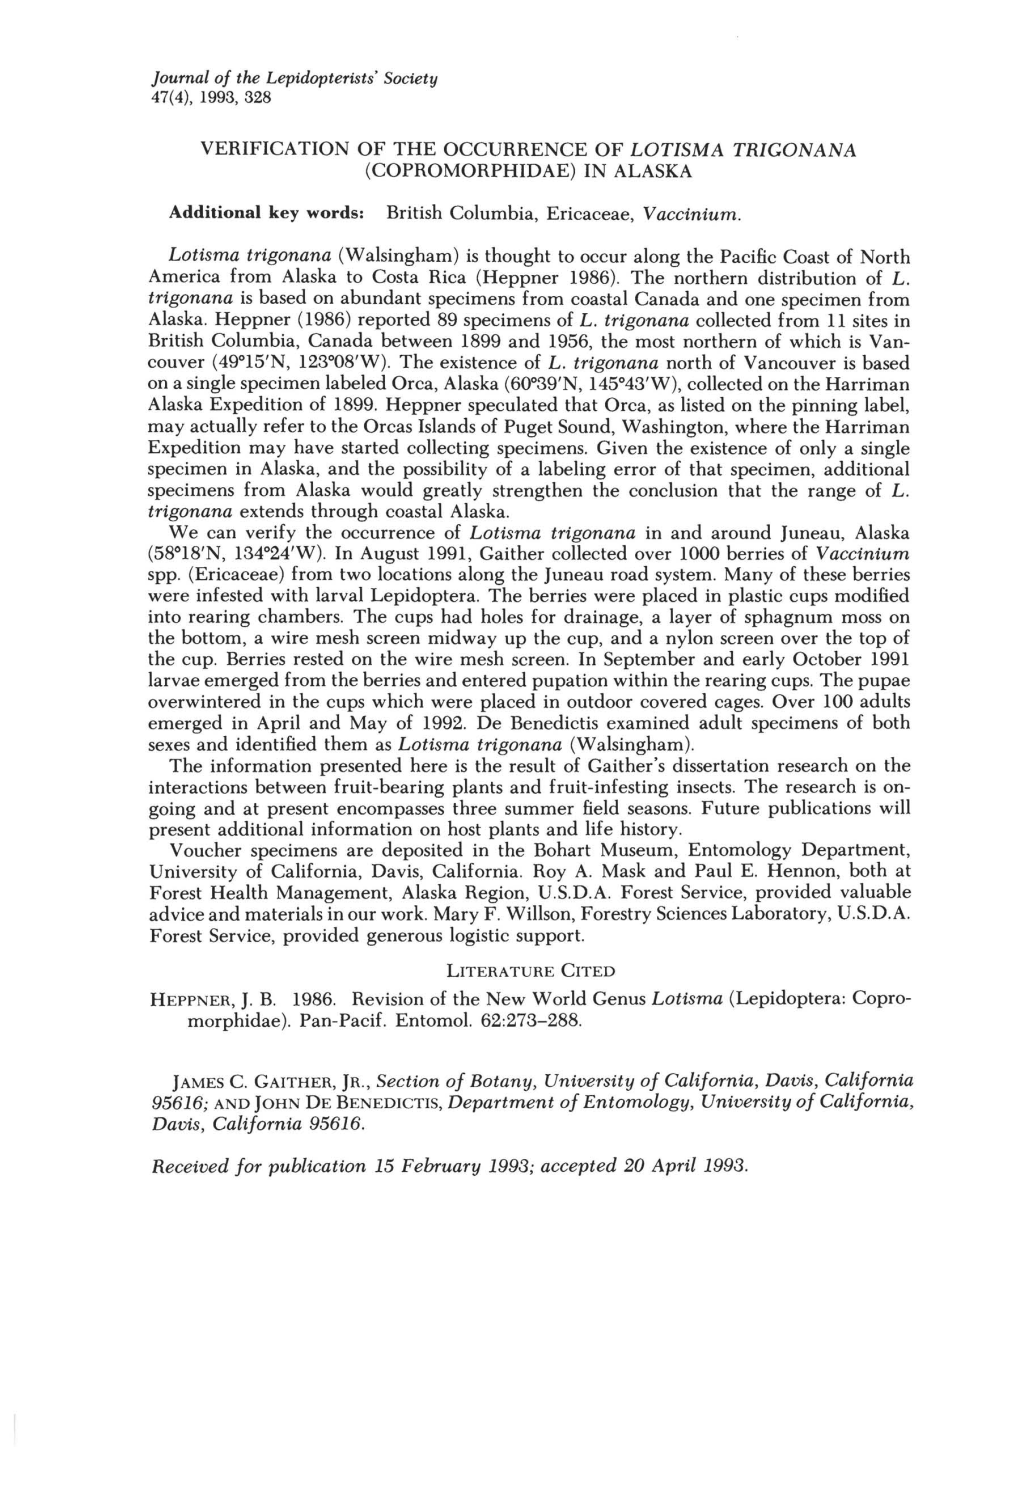 VERIFICATION of the OCCURRENCE of LOTISMA TRIGONANA (COPROMORPHIDAE) in ALASKA Additional Key Words: British Columbia, Ericaceae